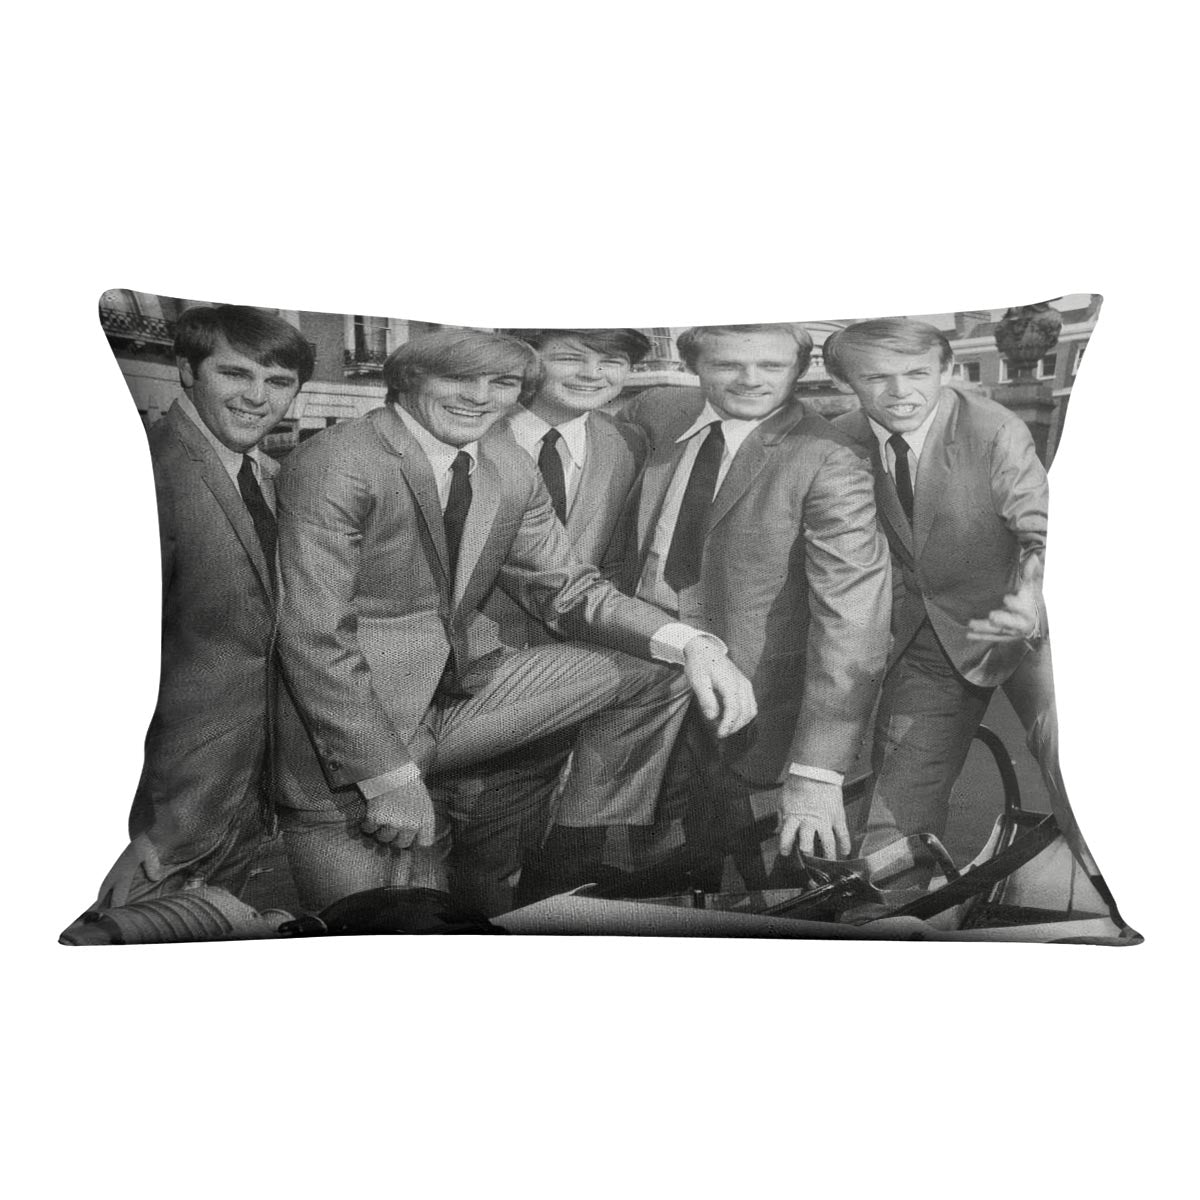 Beach Boys in suits Cushion